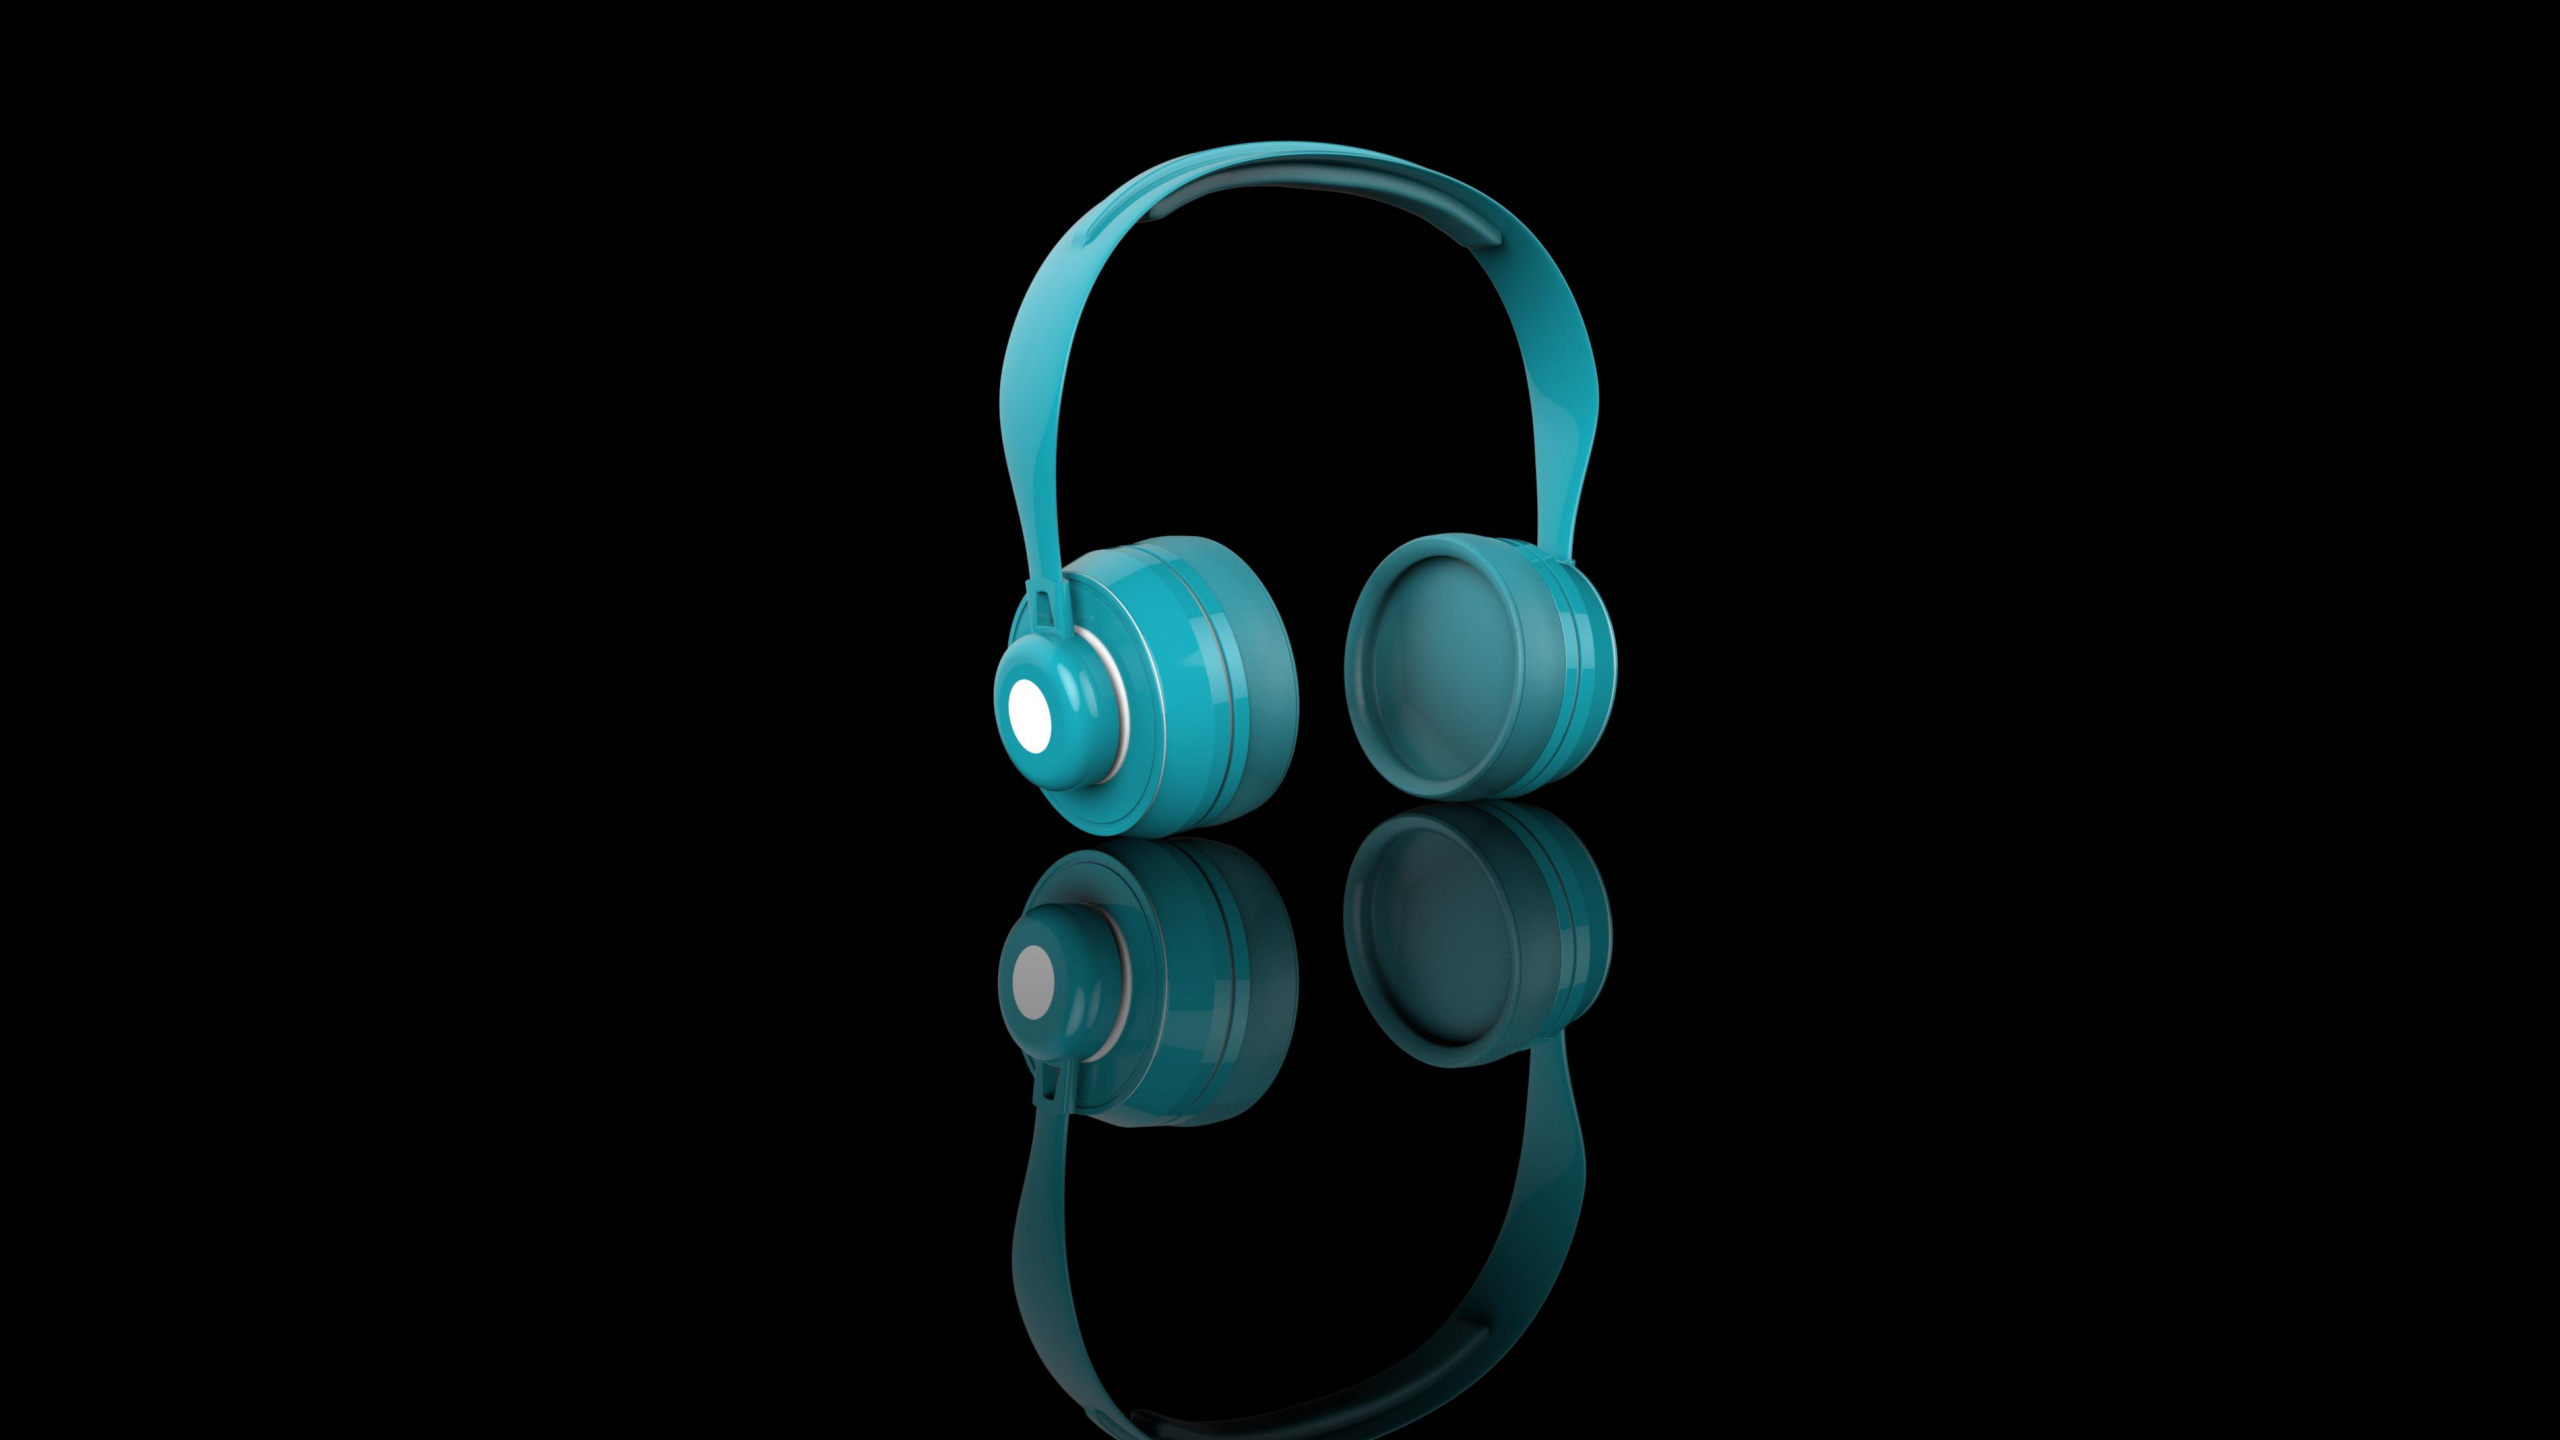 Headphones, Audio Equipment, Audio Signal, Turquoise, Green. Wallpaper in 2560x1440 Resolution